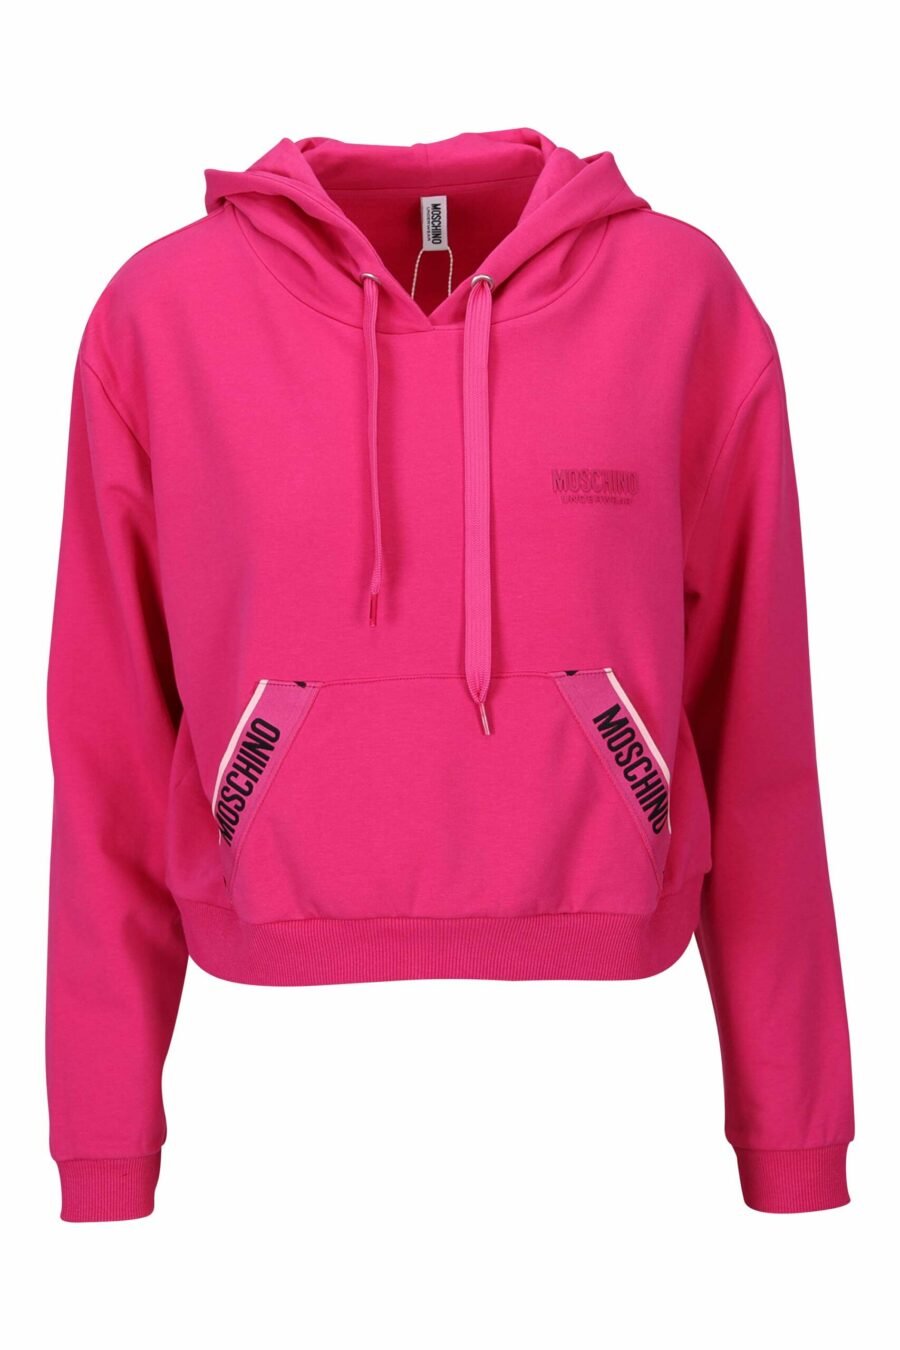 Fuchsia sweatshirt with hood and logo pockets - 889316615234 scaled